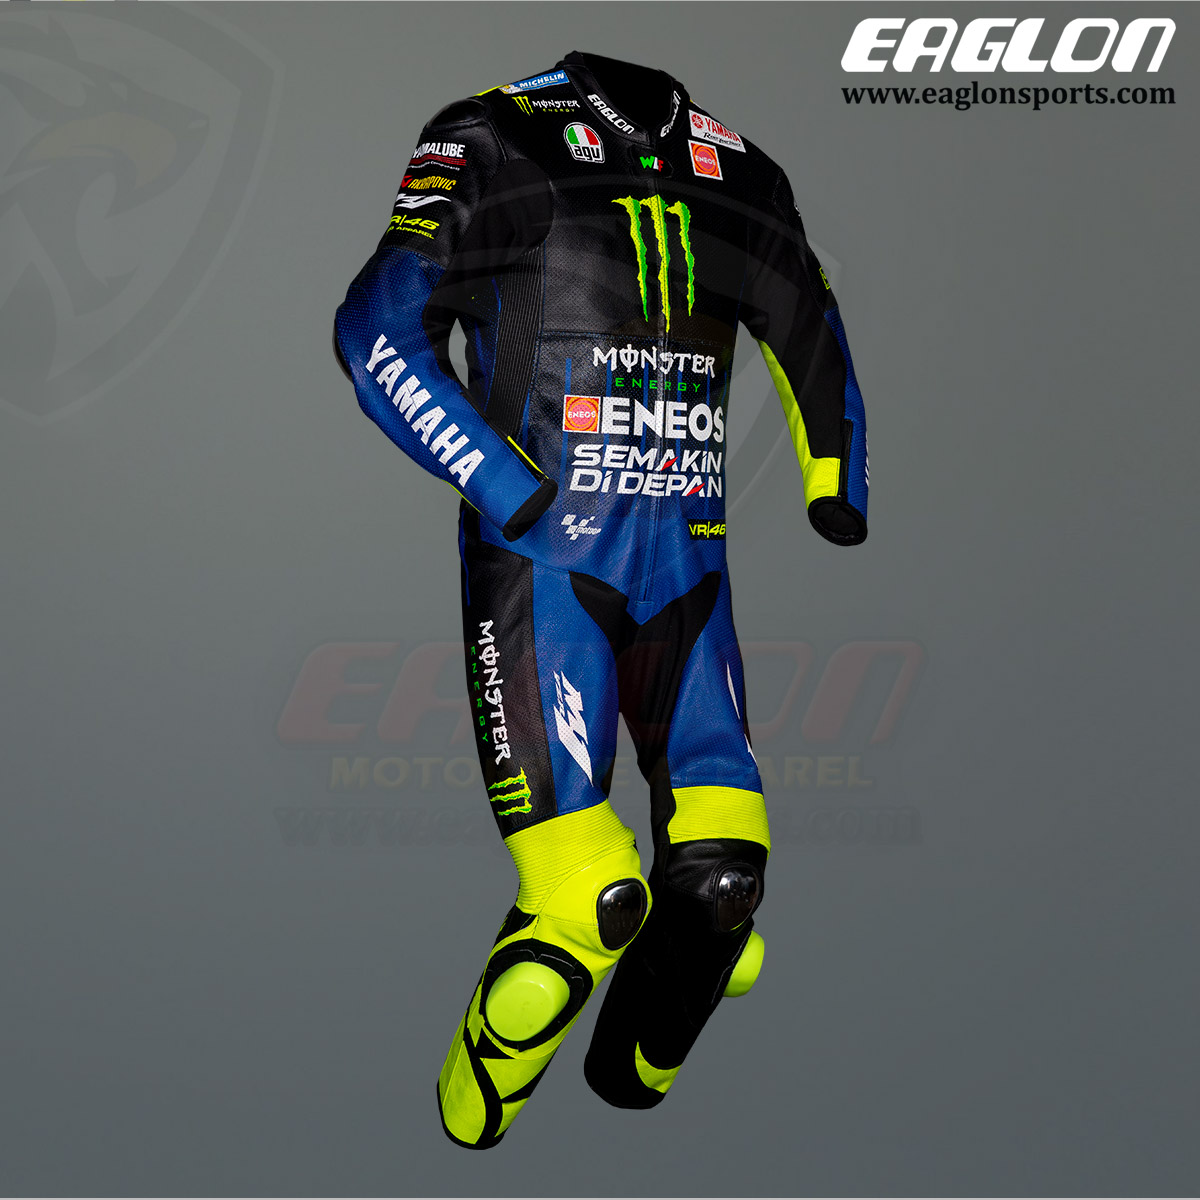 Valentino-Rossi-Yamaha-MotoGP-2020-Leather-Suit